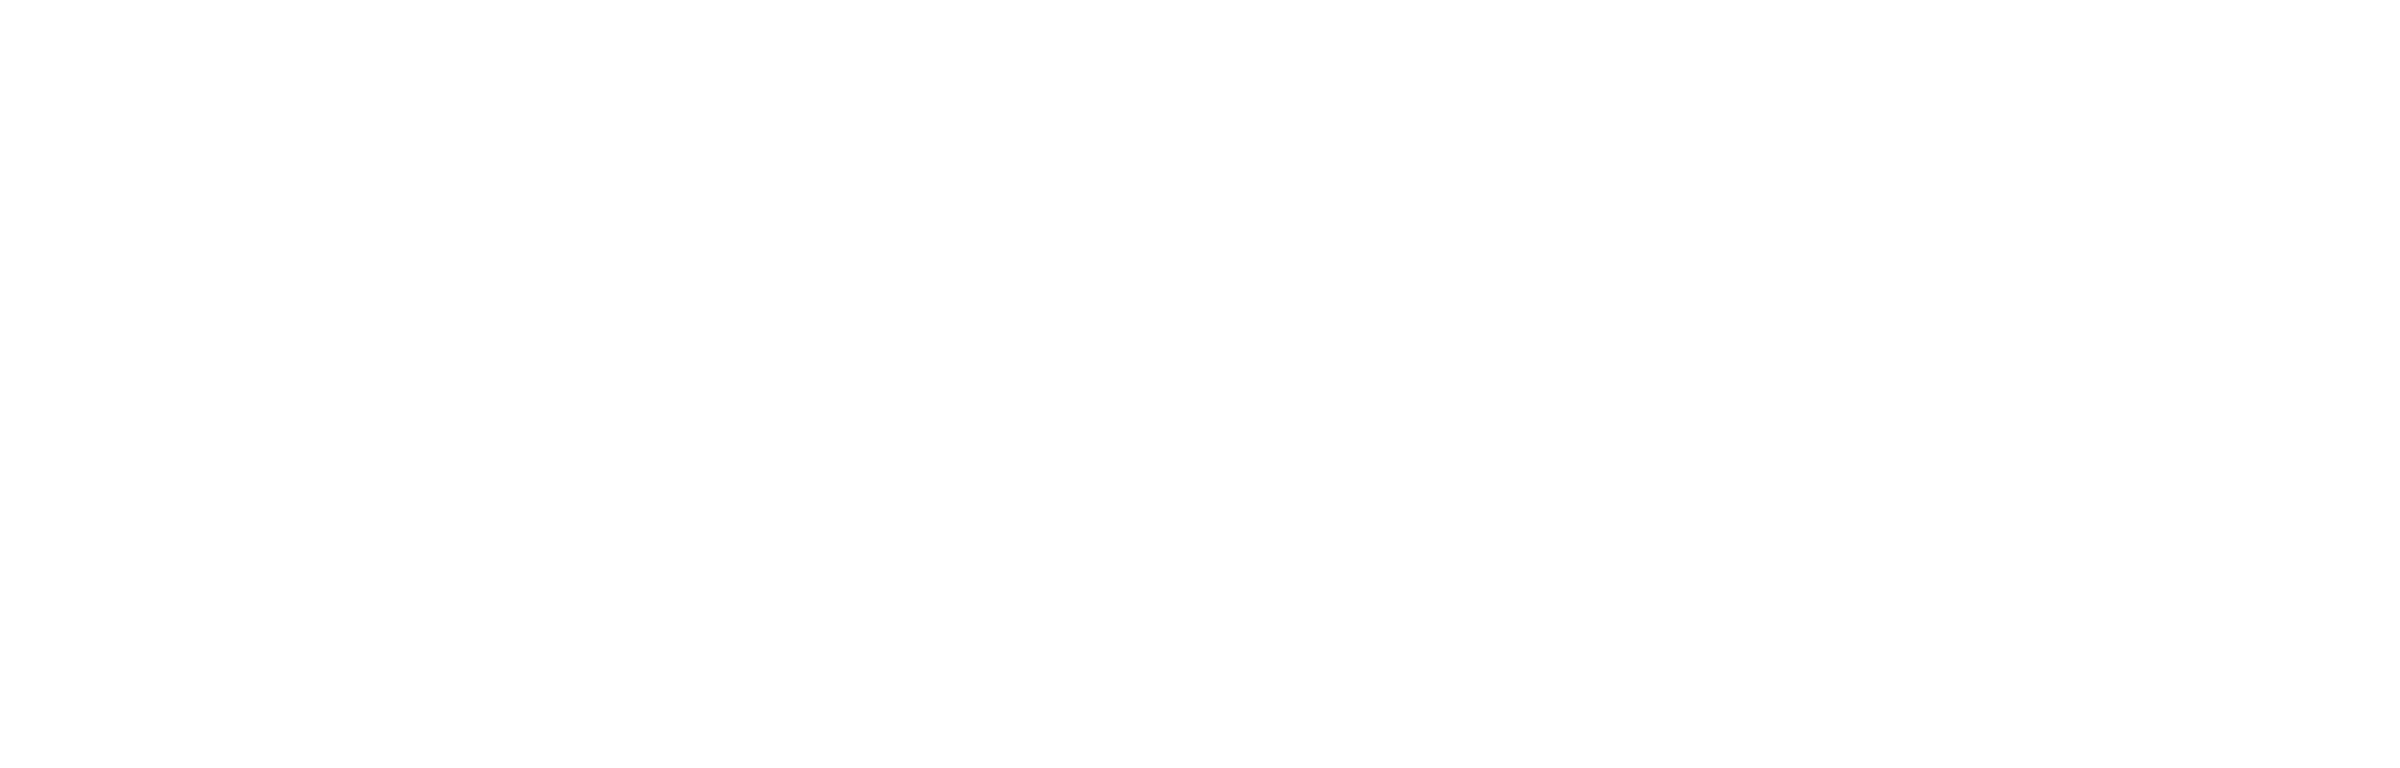 Reservation Info